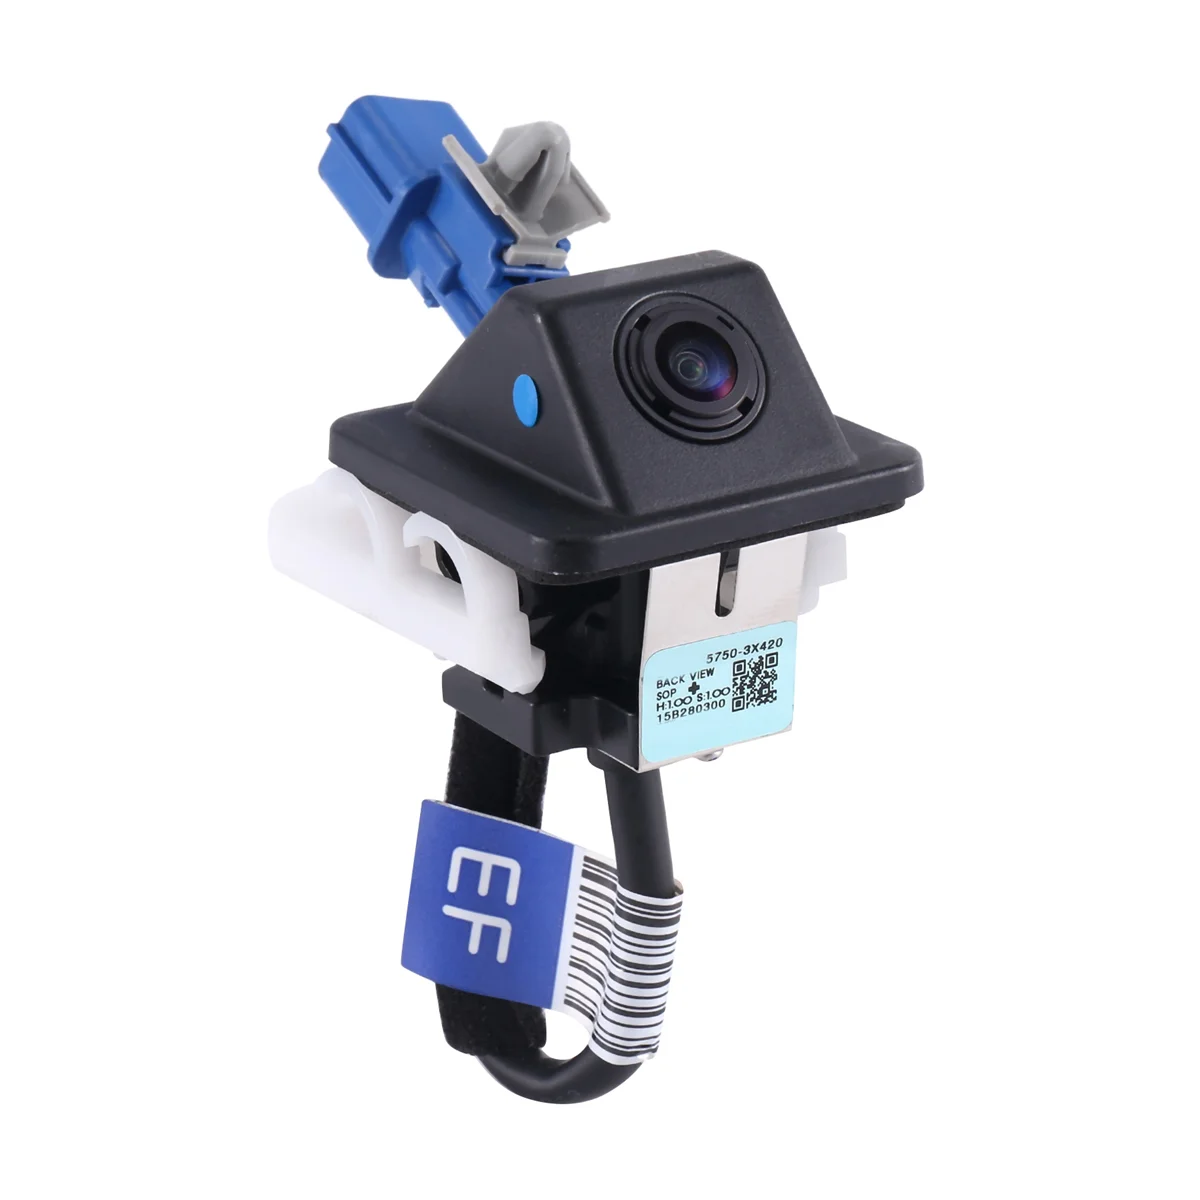 

95760-3X420 New Rear View Camera Reverse Camera Parking Assist Backup Camera for Hyundai Elantra GT 2014-2015